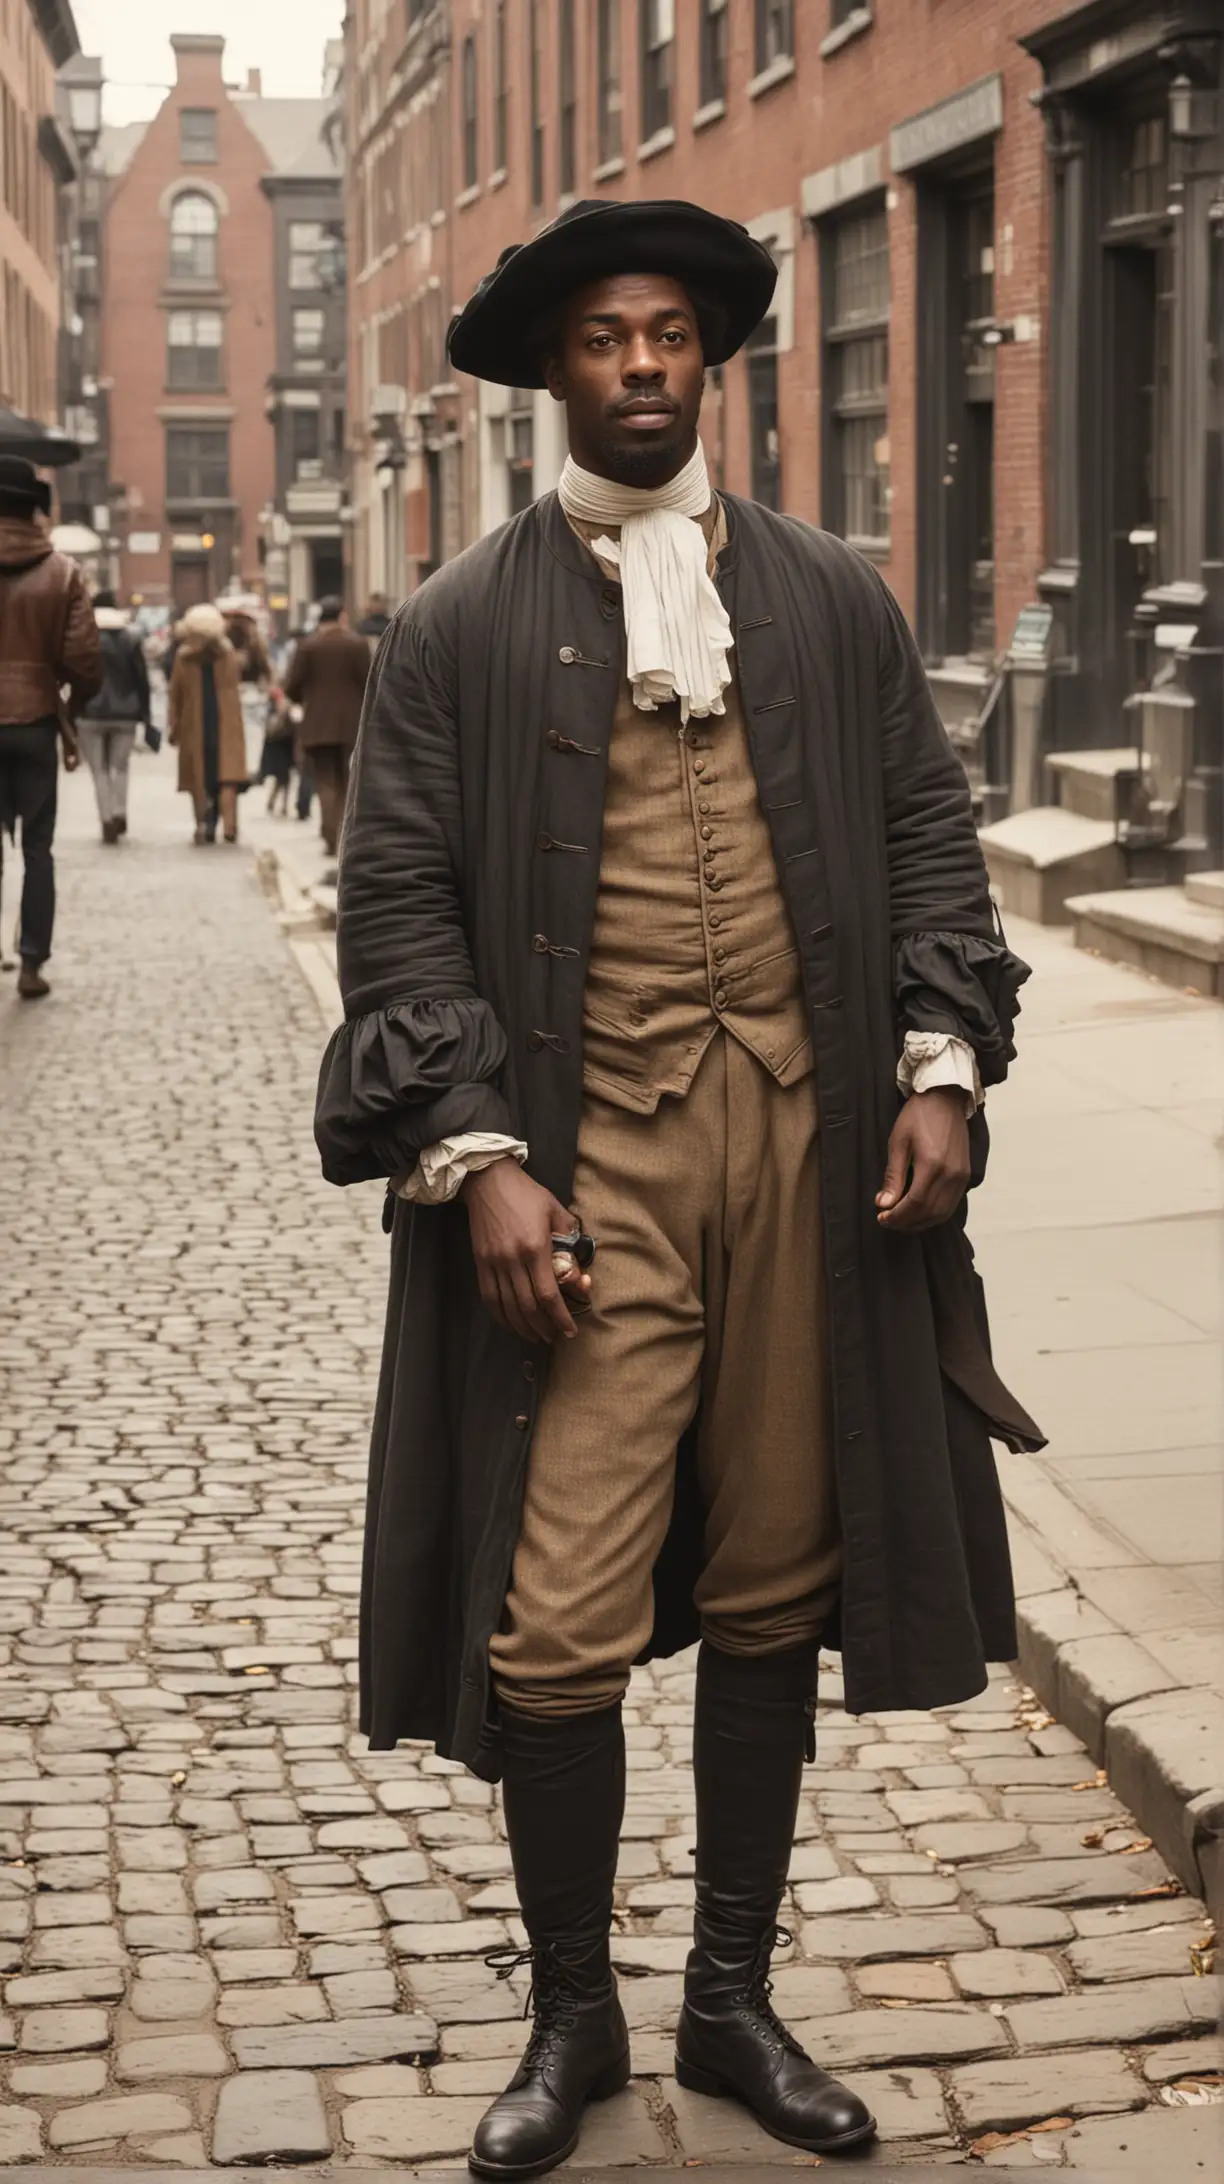 Seventeenth Century Black Man Walking the Cobbled Streets of Boston